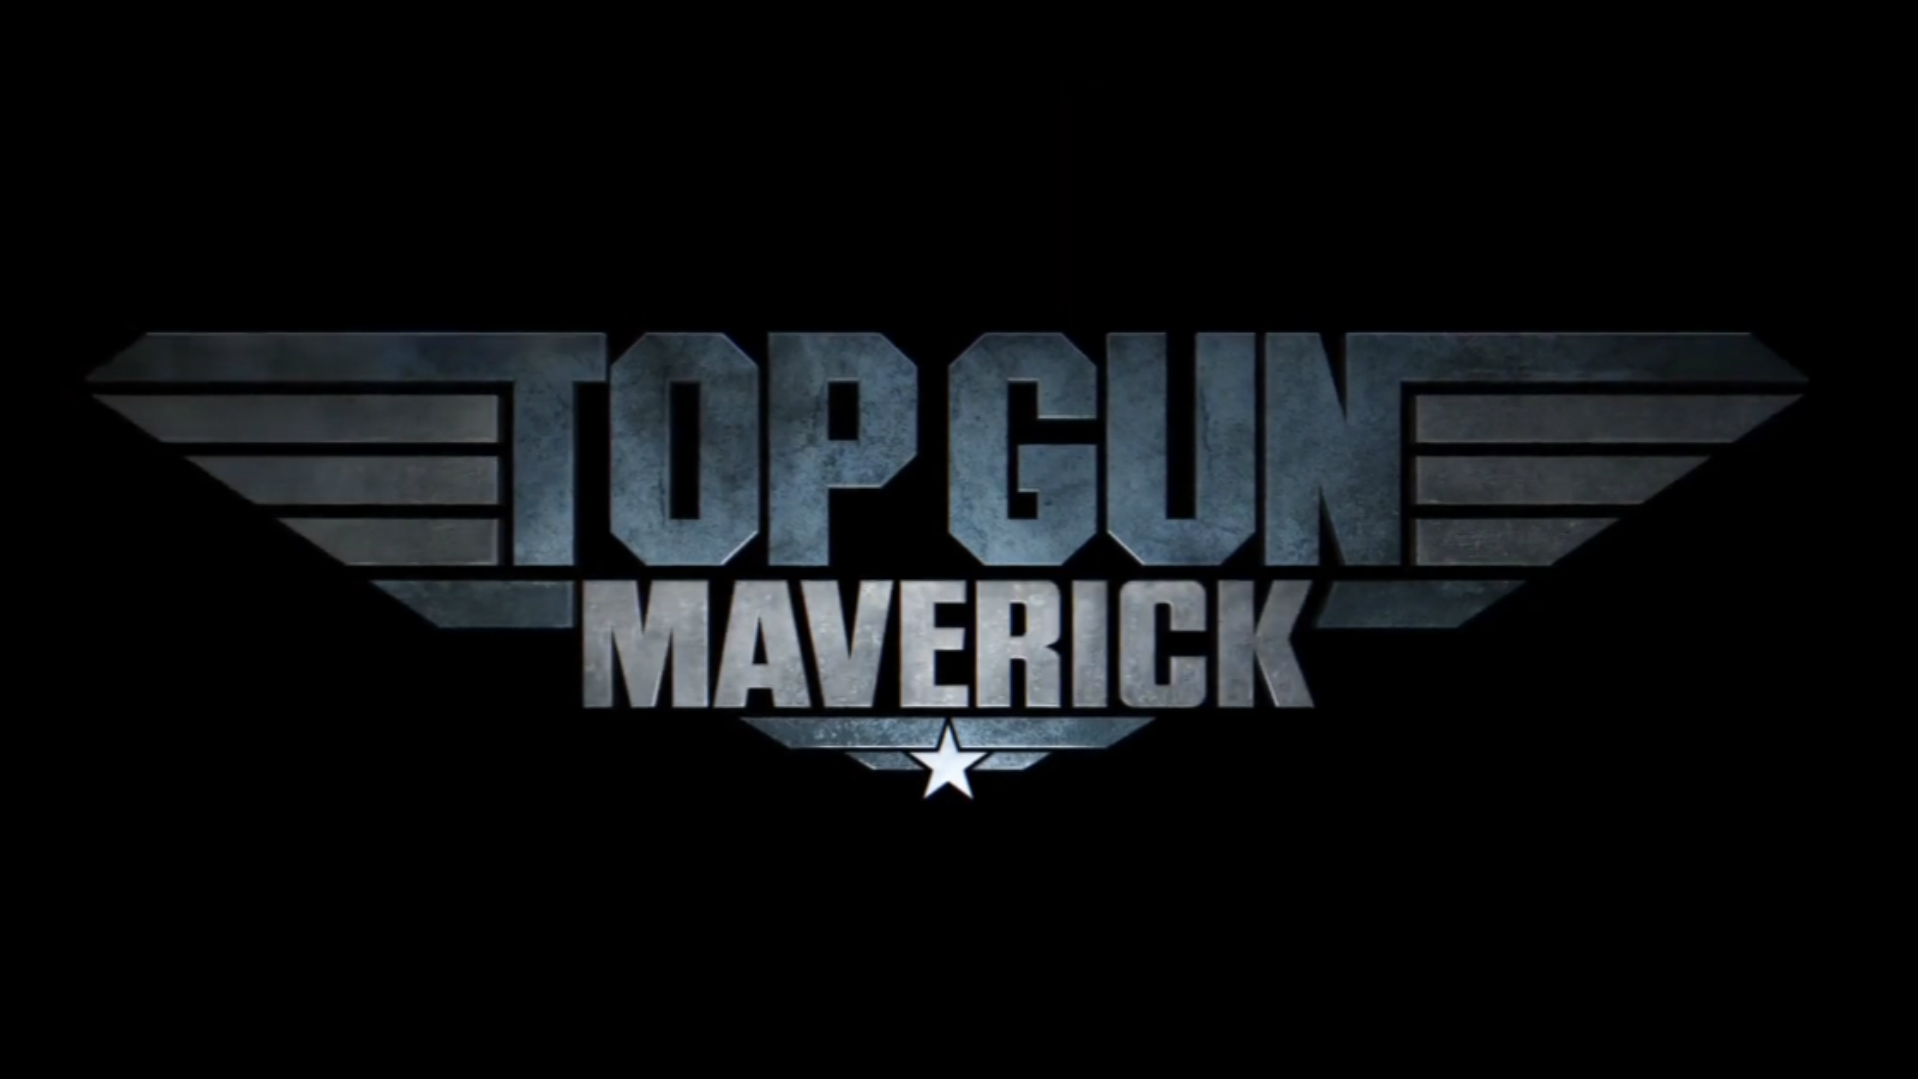 New Top Gun: Maverick trailer released!